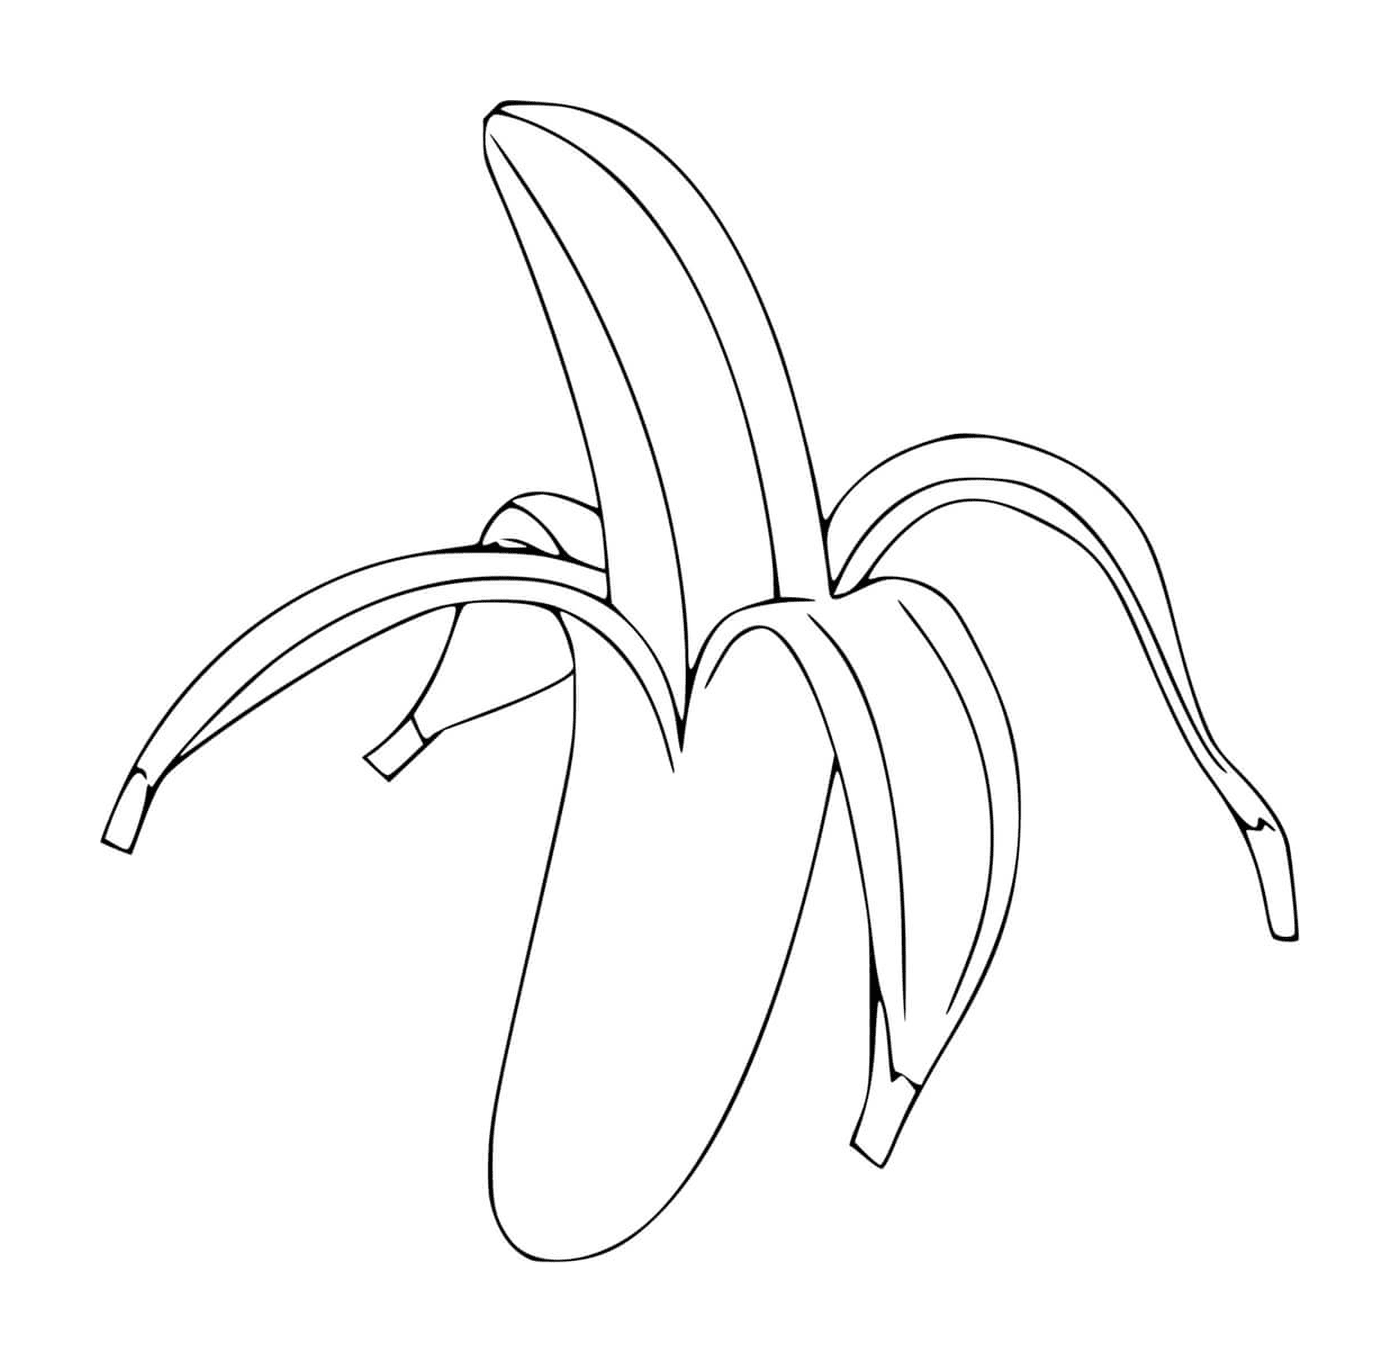  Unpeeled banana 